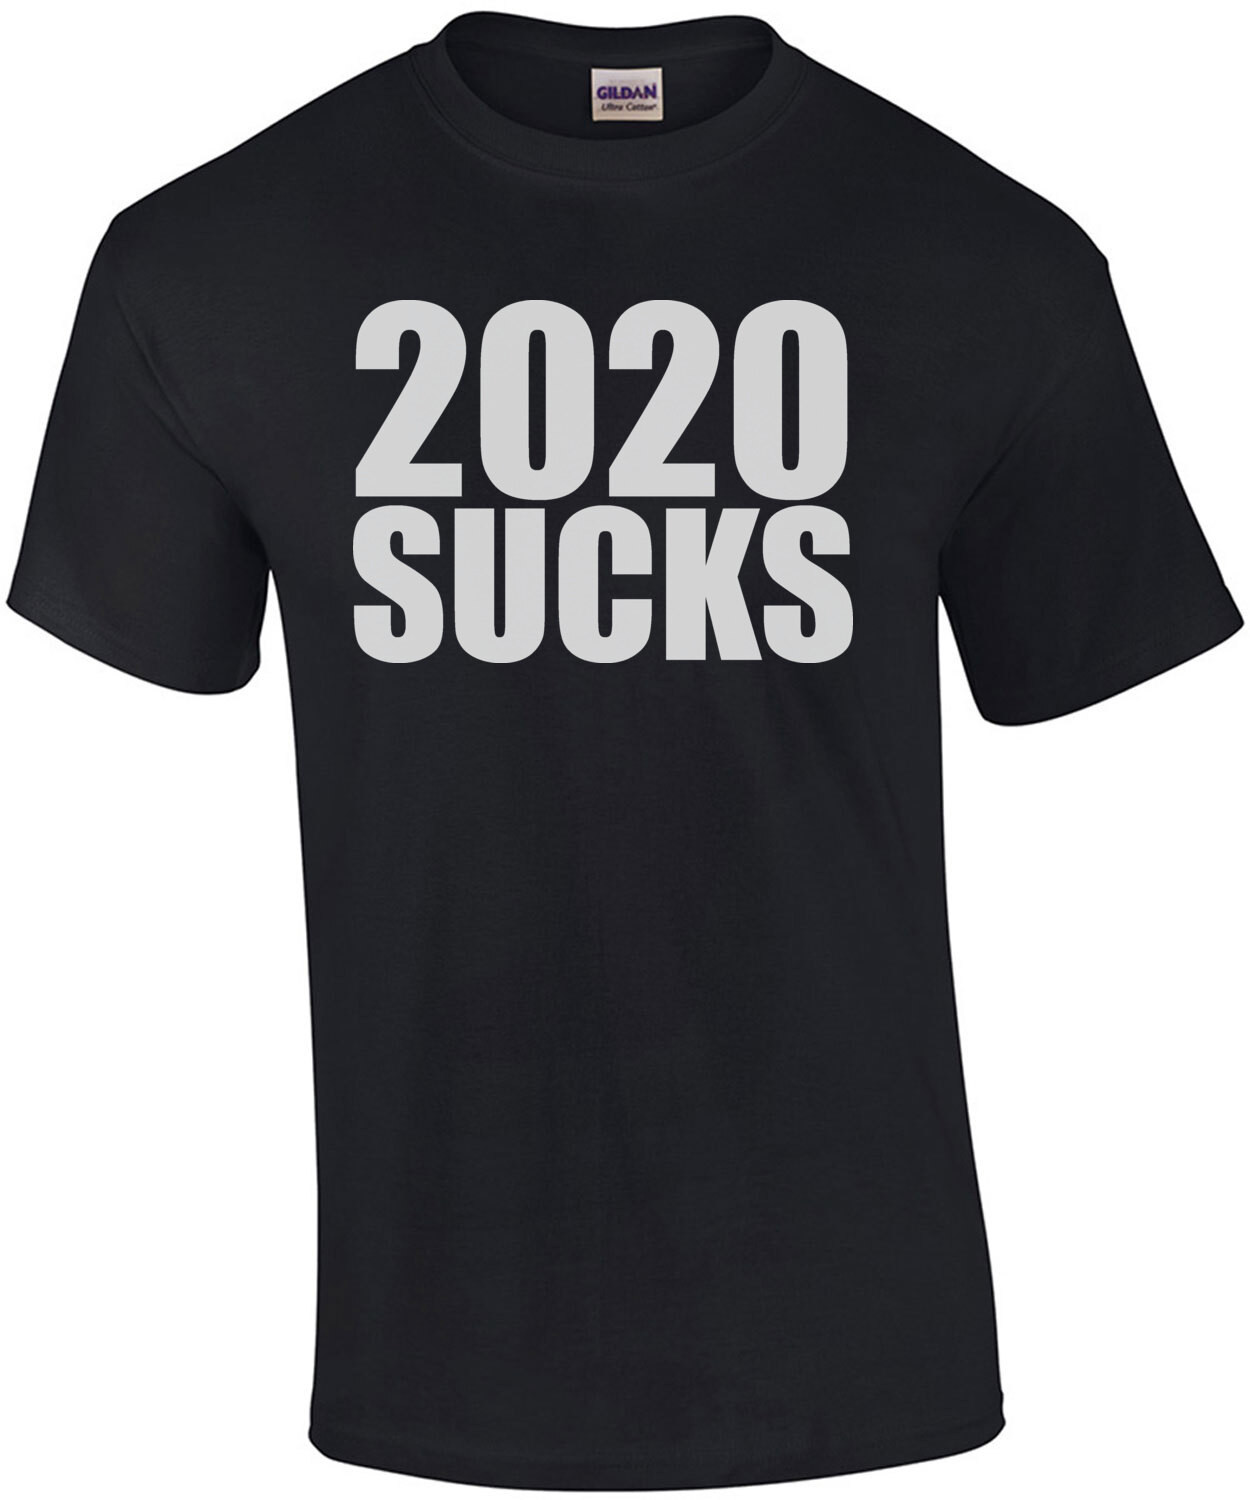 2020 SUCKS - T-Shirt